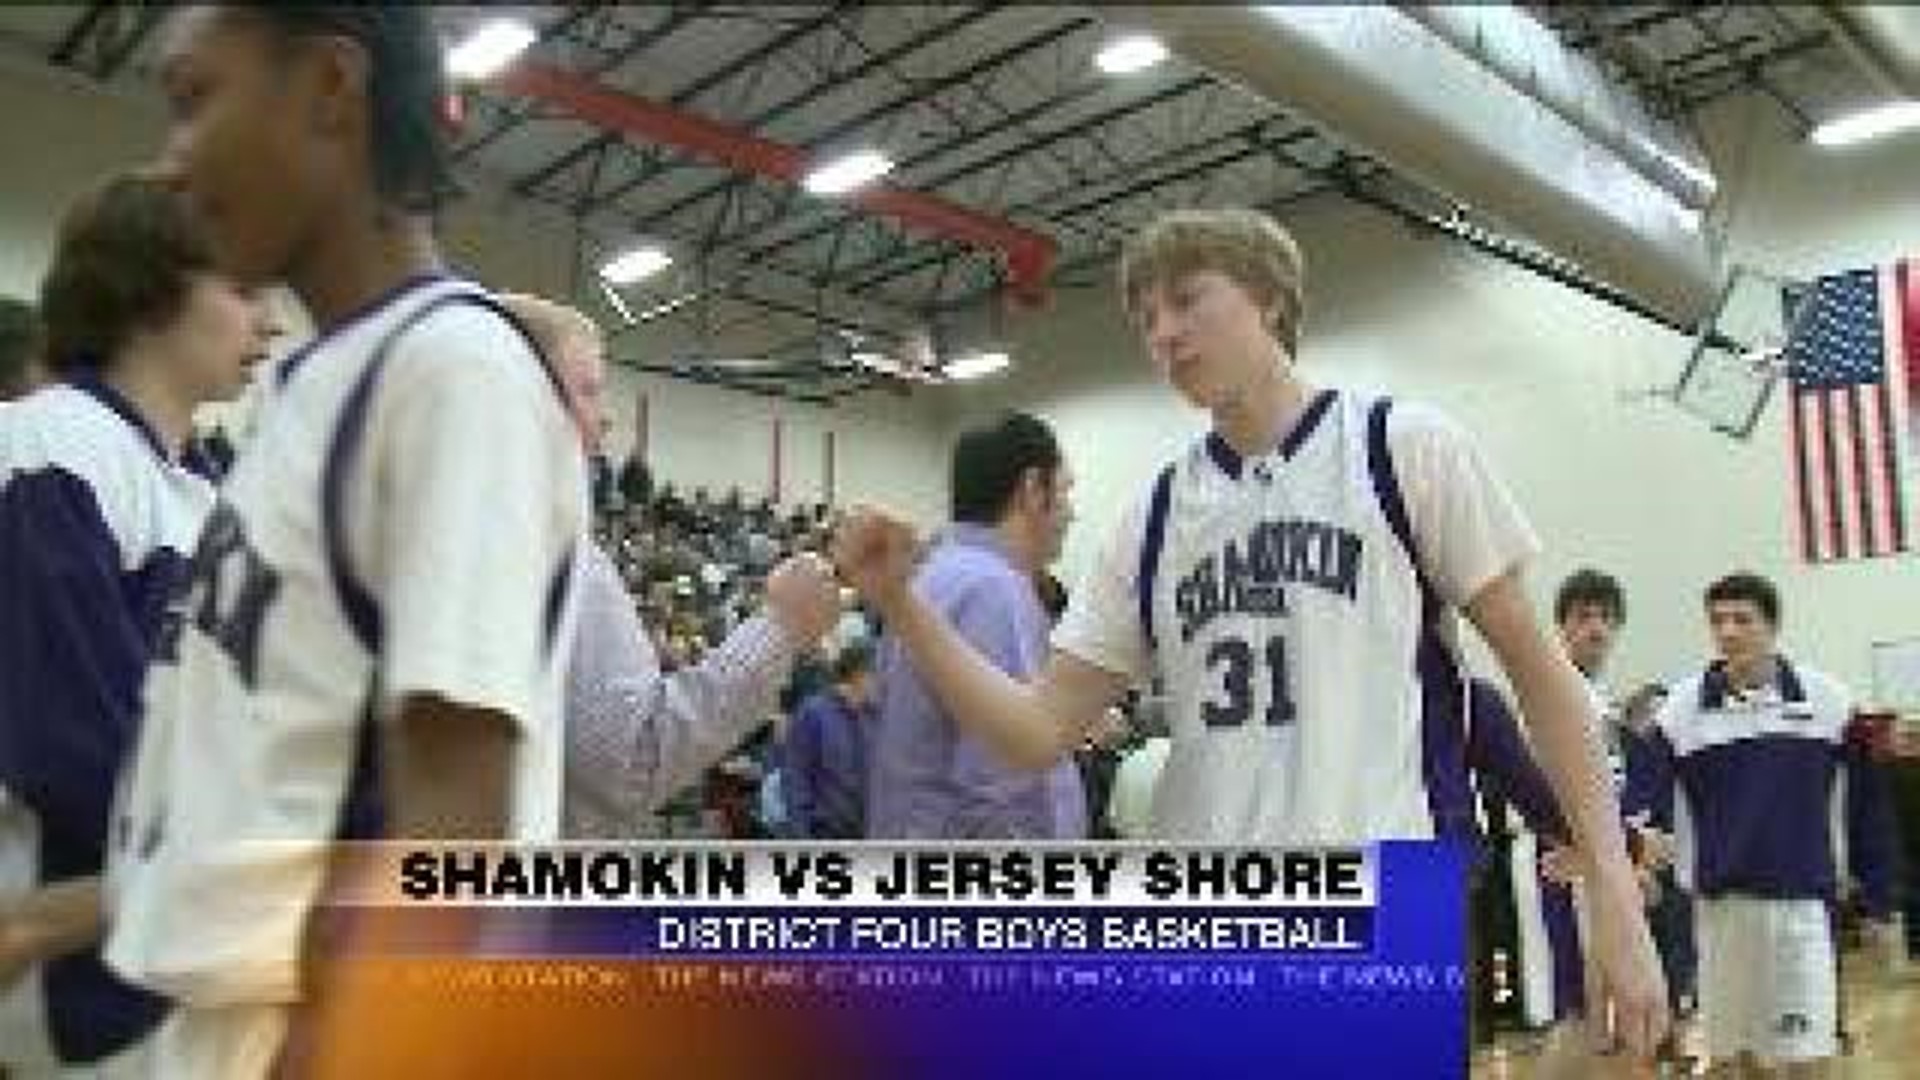 Shamokin vs Jersey Shore